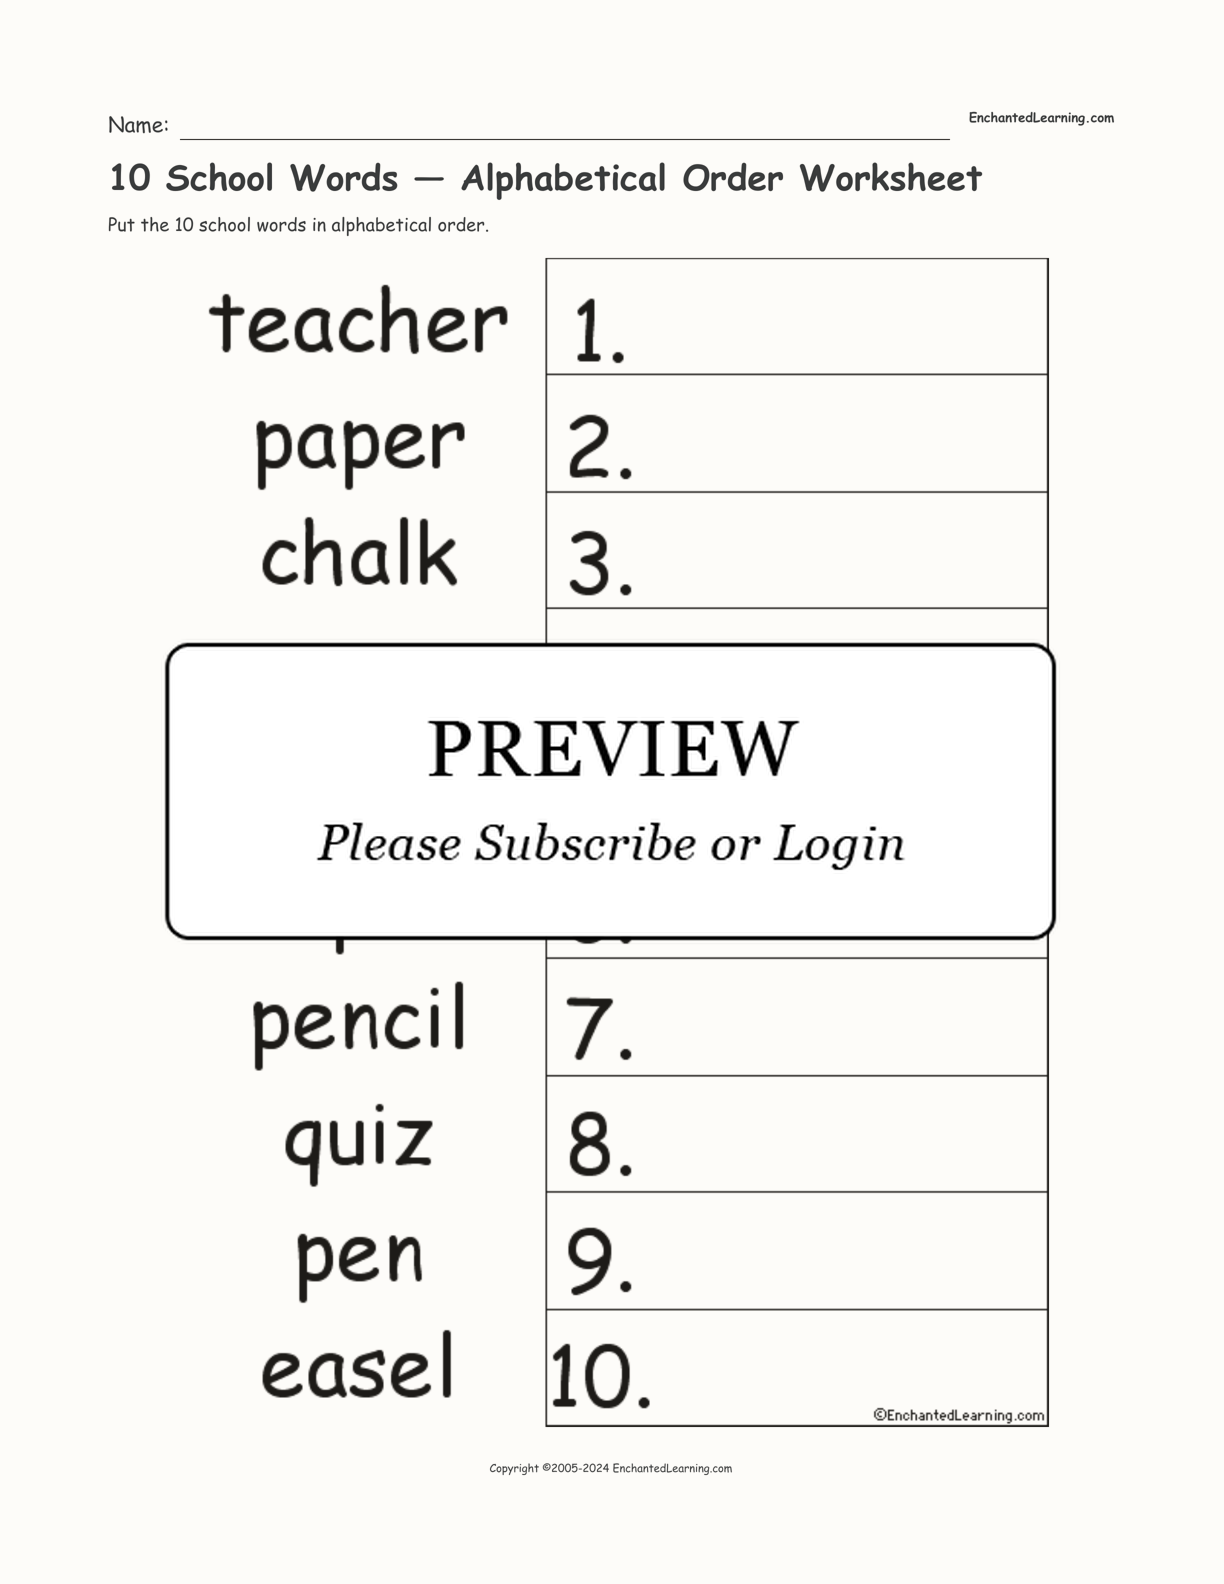 10 School Words — Alphabetical Order Worksheet interactive worksheet page 1